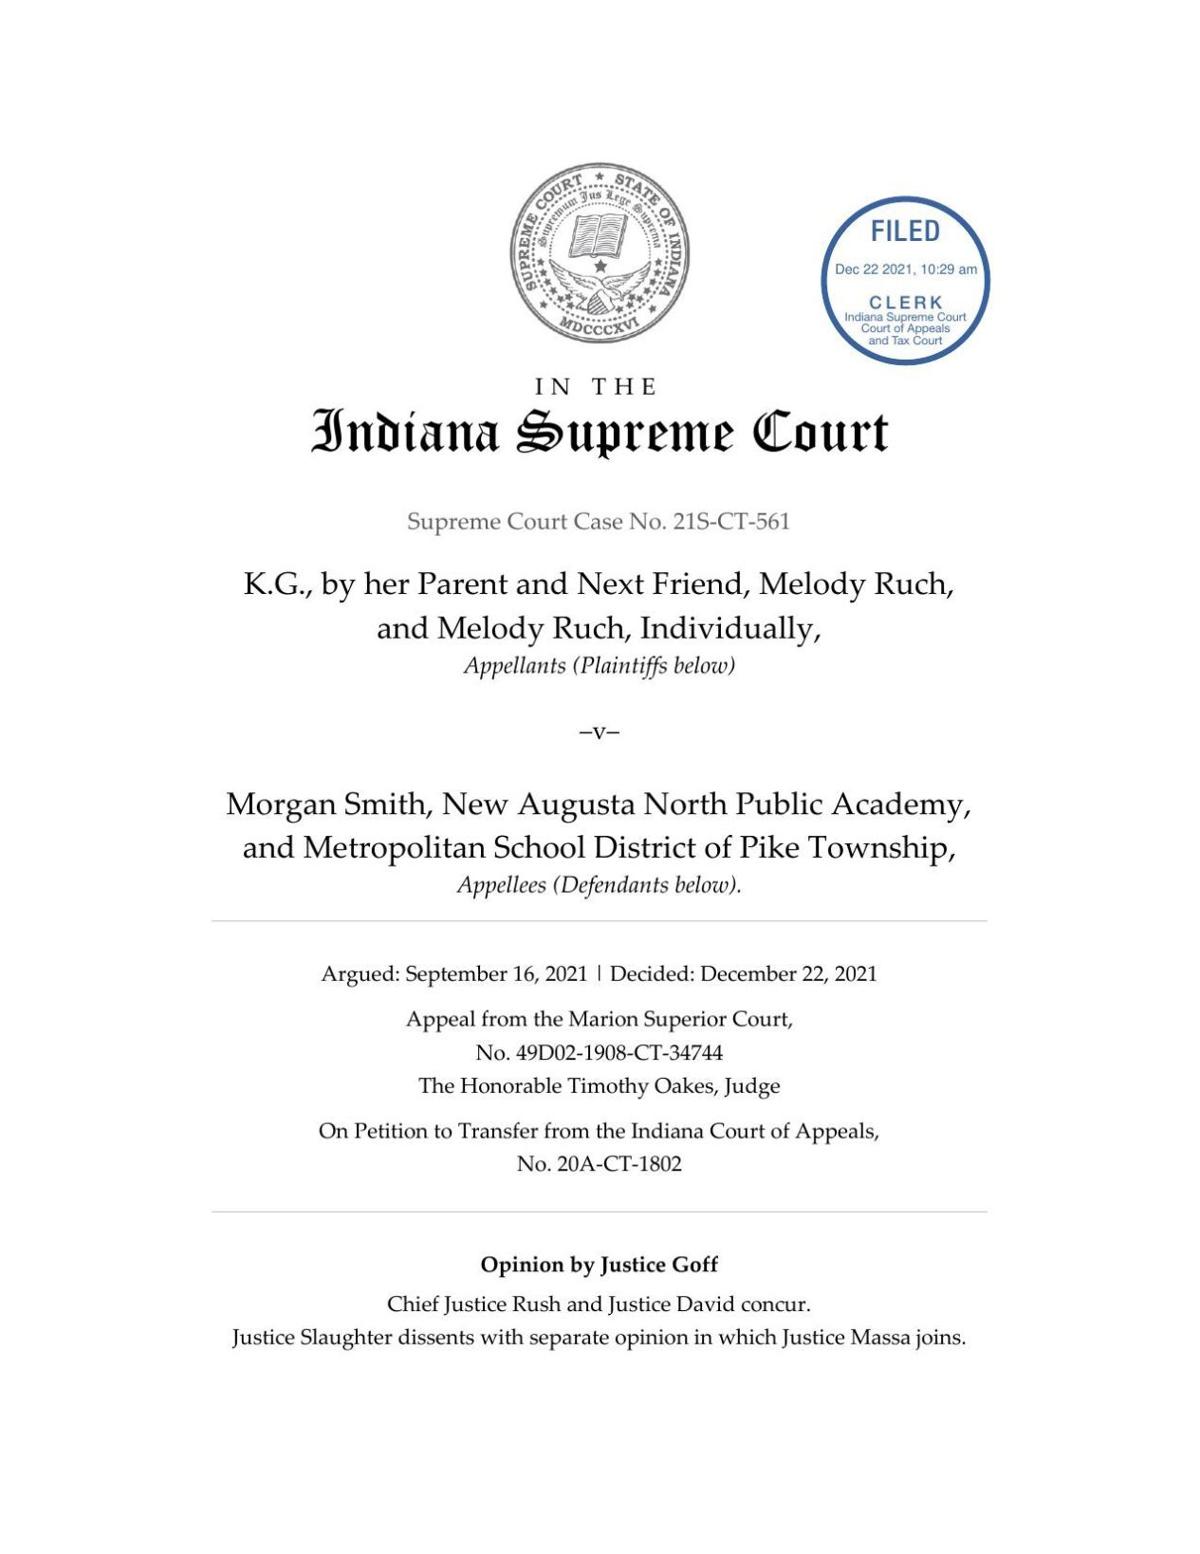 K.G. v. Smith ruling of Indiana Supreme Court